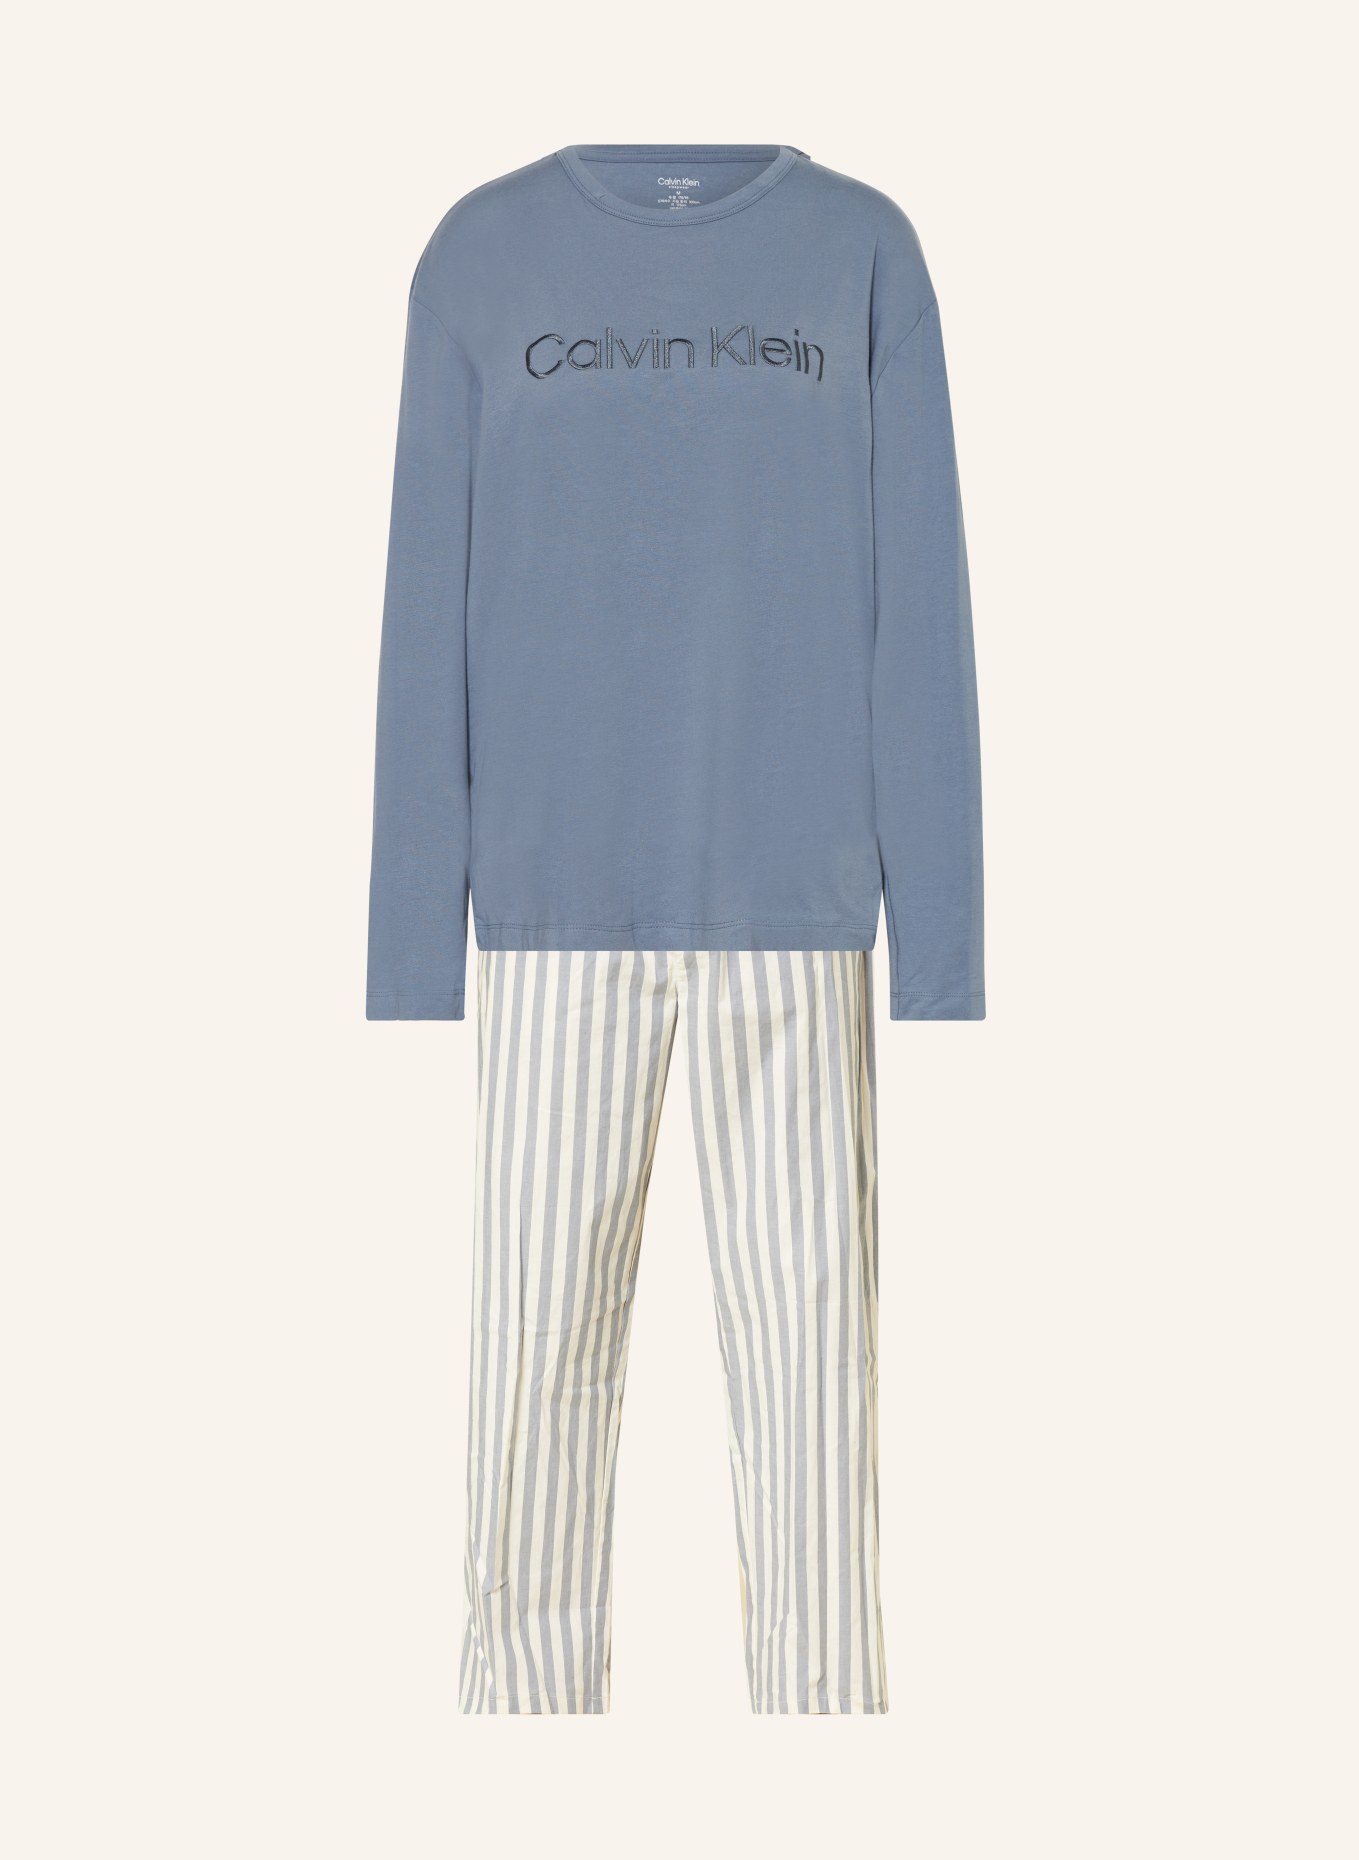 Calvin Klein Schlafanzug PURE COTTON, Farbe: BLAUGRAU/ ECRU (Bild 1)